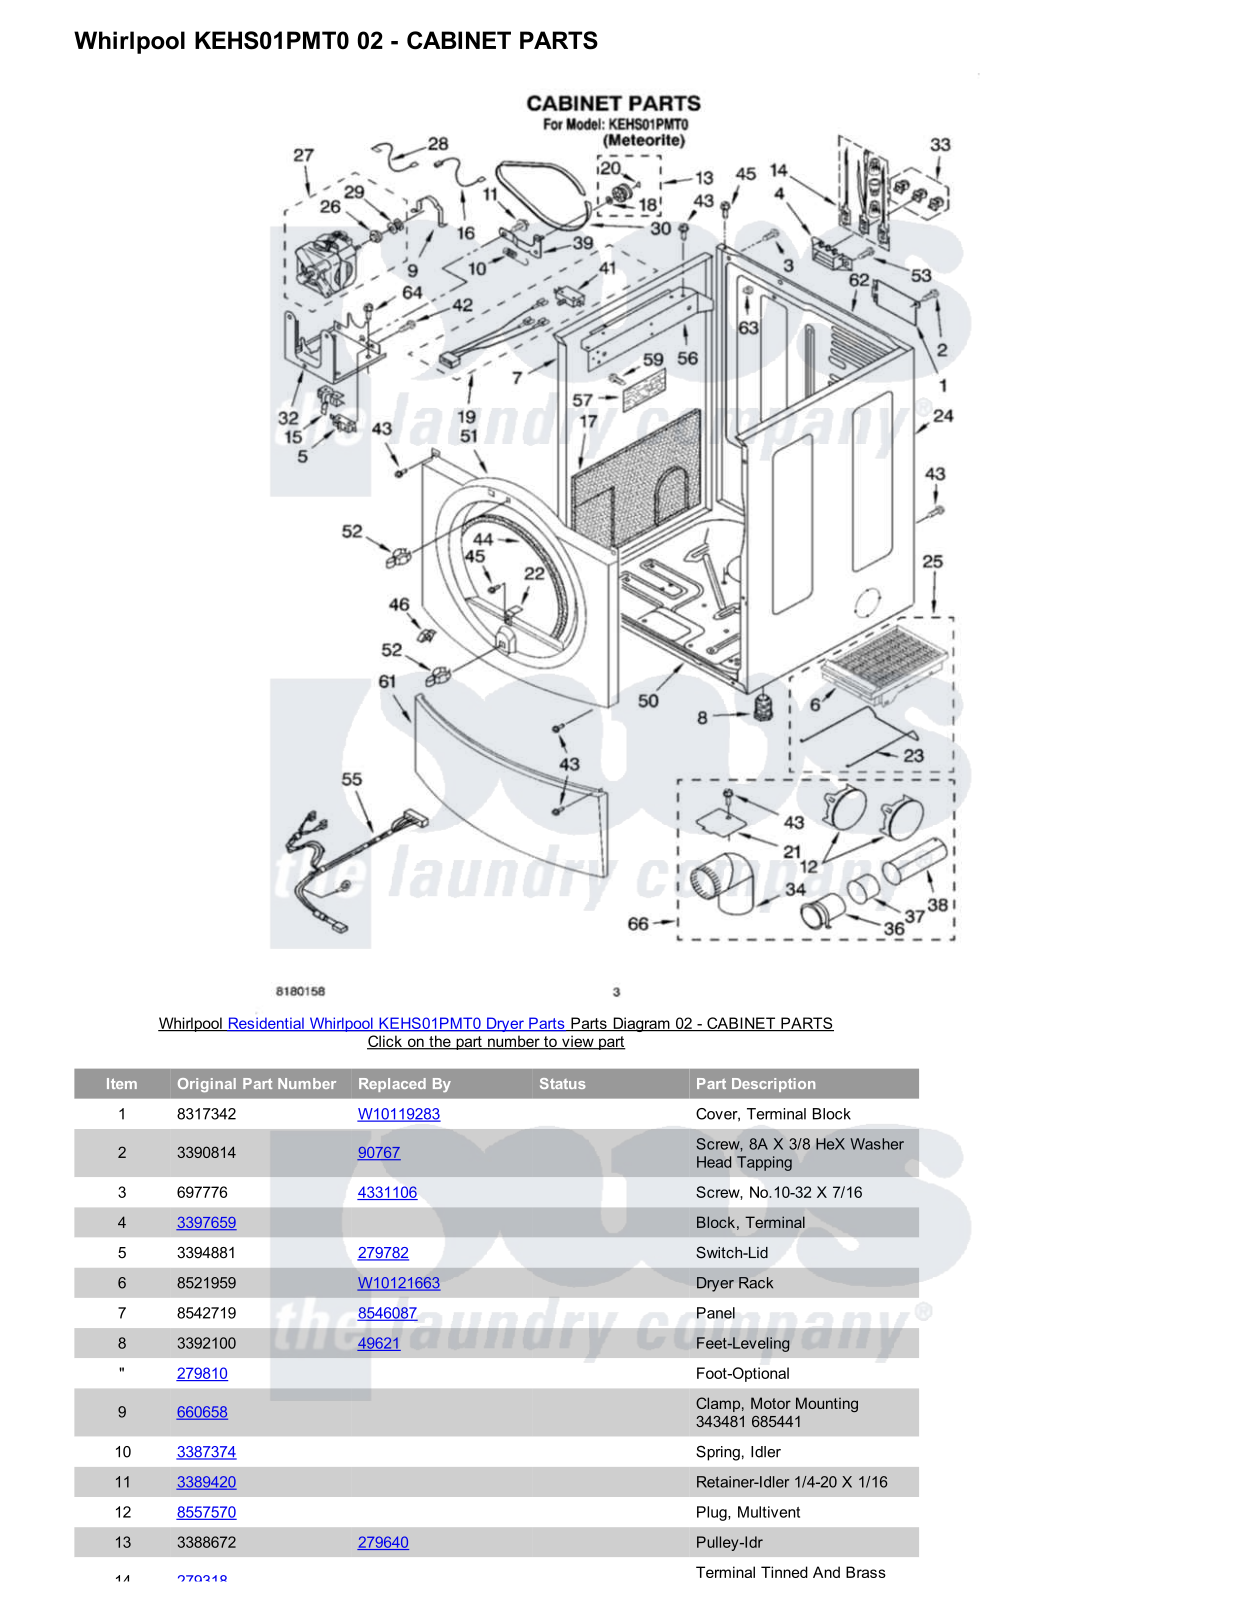 Whirlpool KEHS01PMT0 Parts Diagram